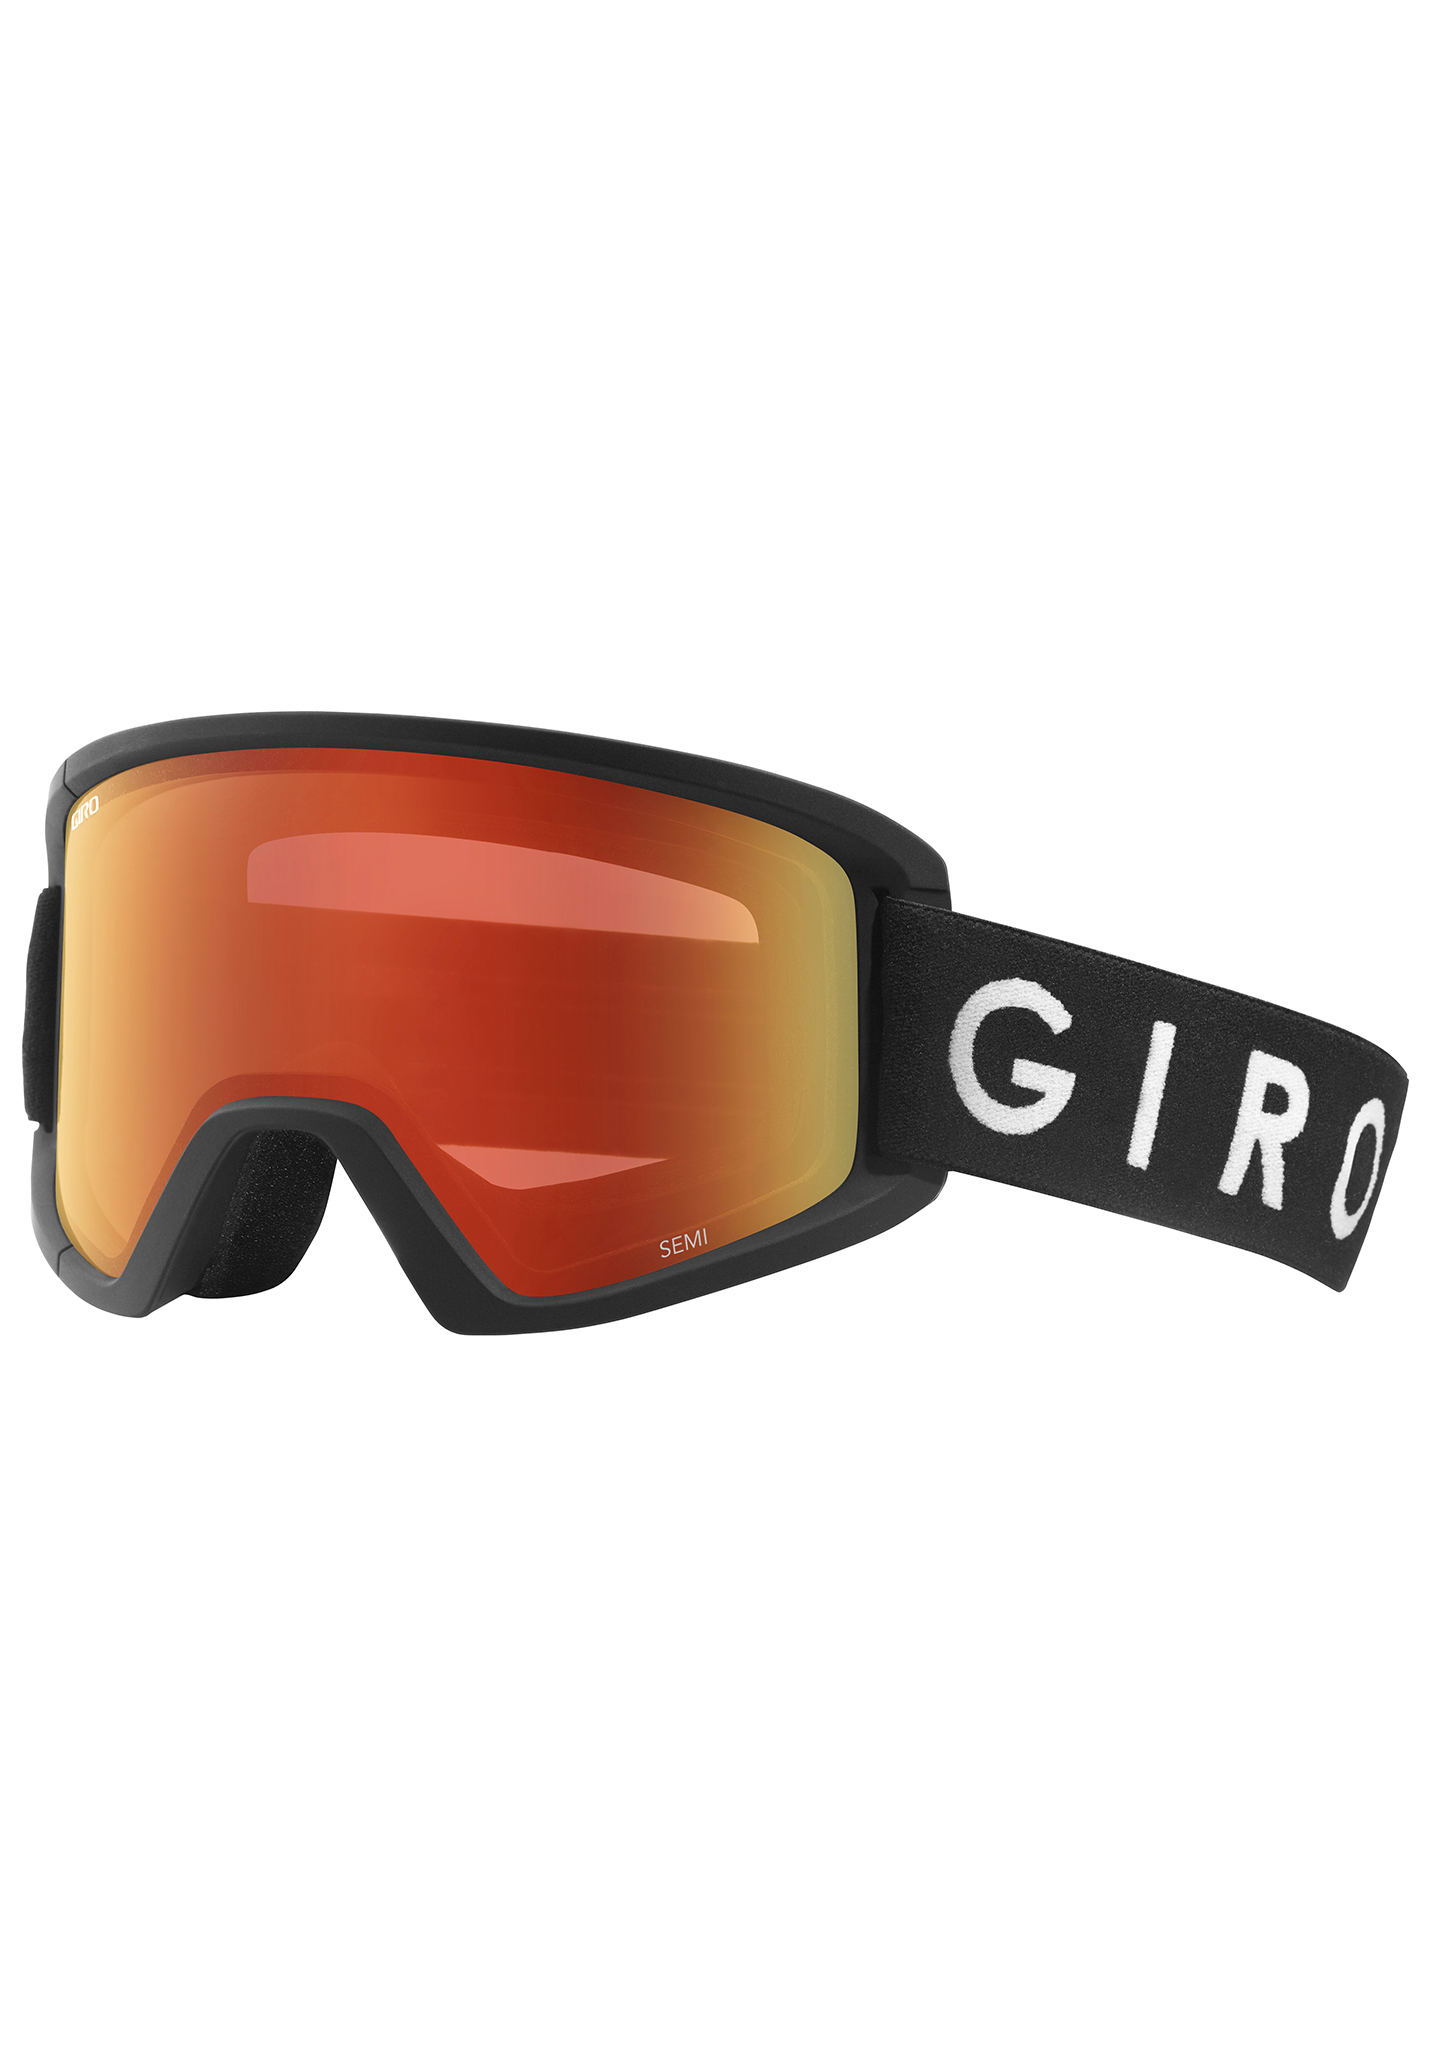 Giro Semi Snowboardbrillen schwarzer kern/scharlachrot One Size